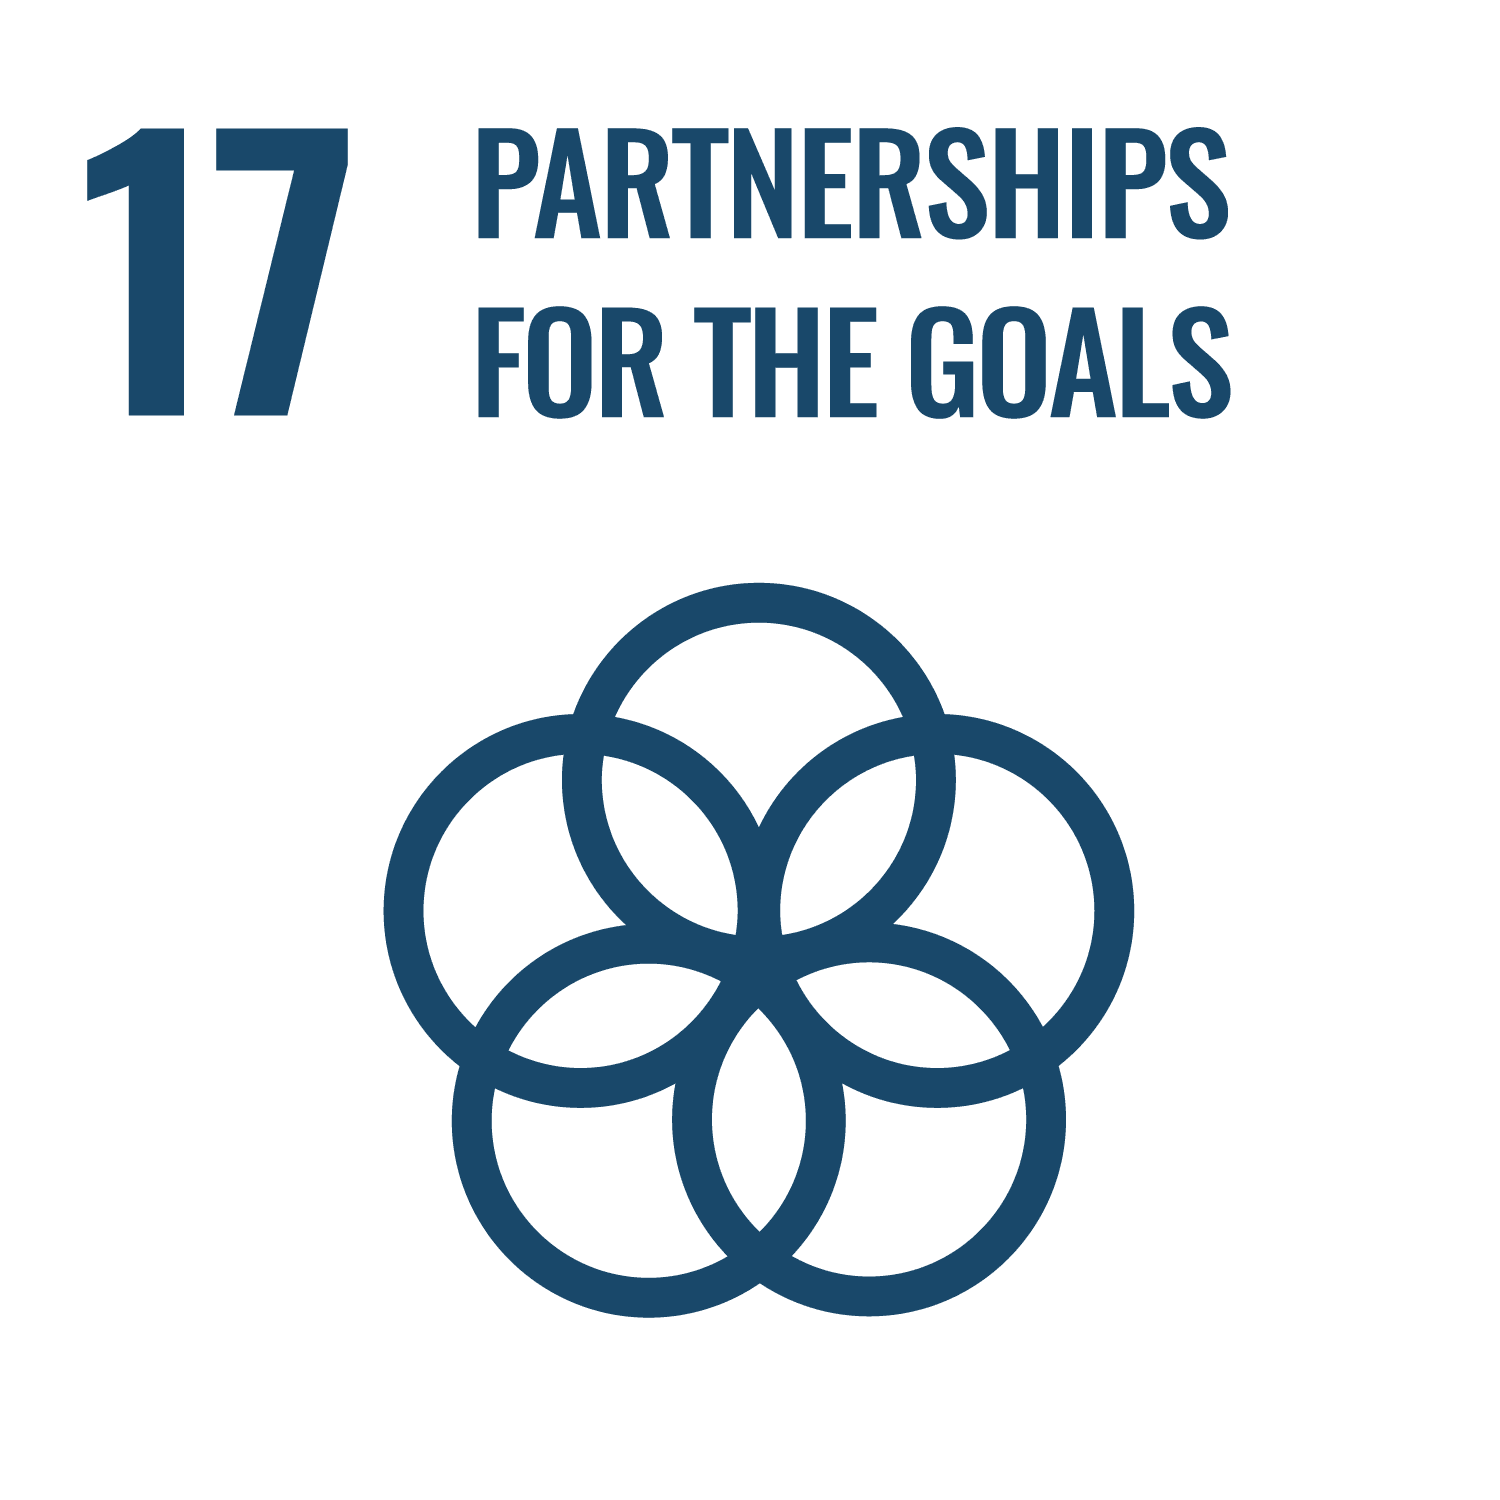 Goal 17, Partnerships for the goals